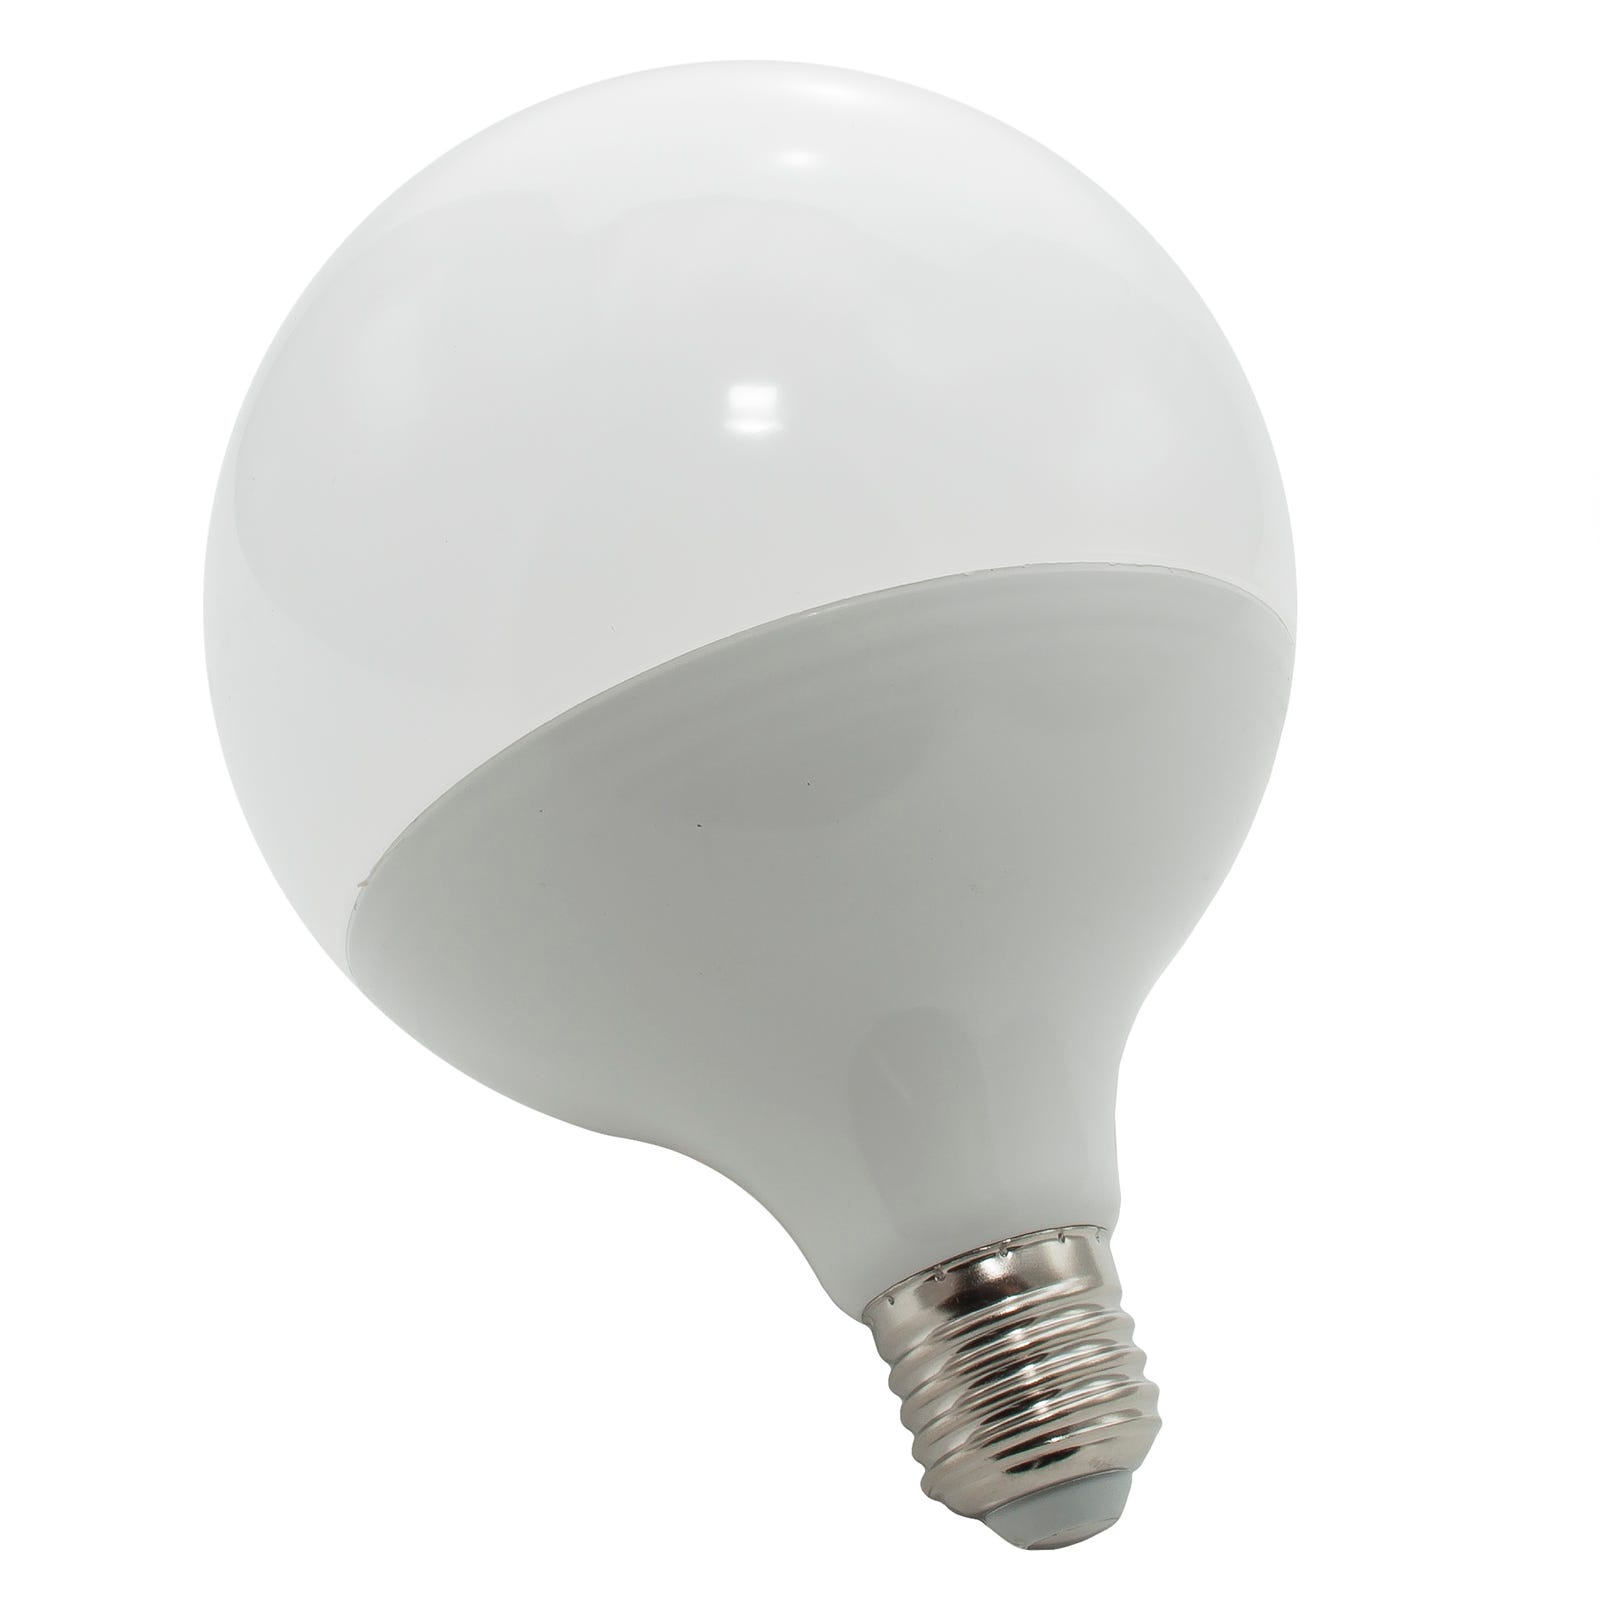 Lampada led globo lampadina E27 potenza 20w 1800 lumen luce